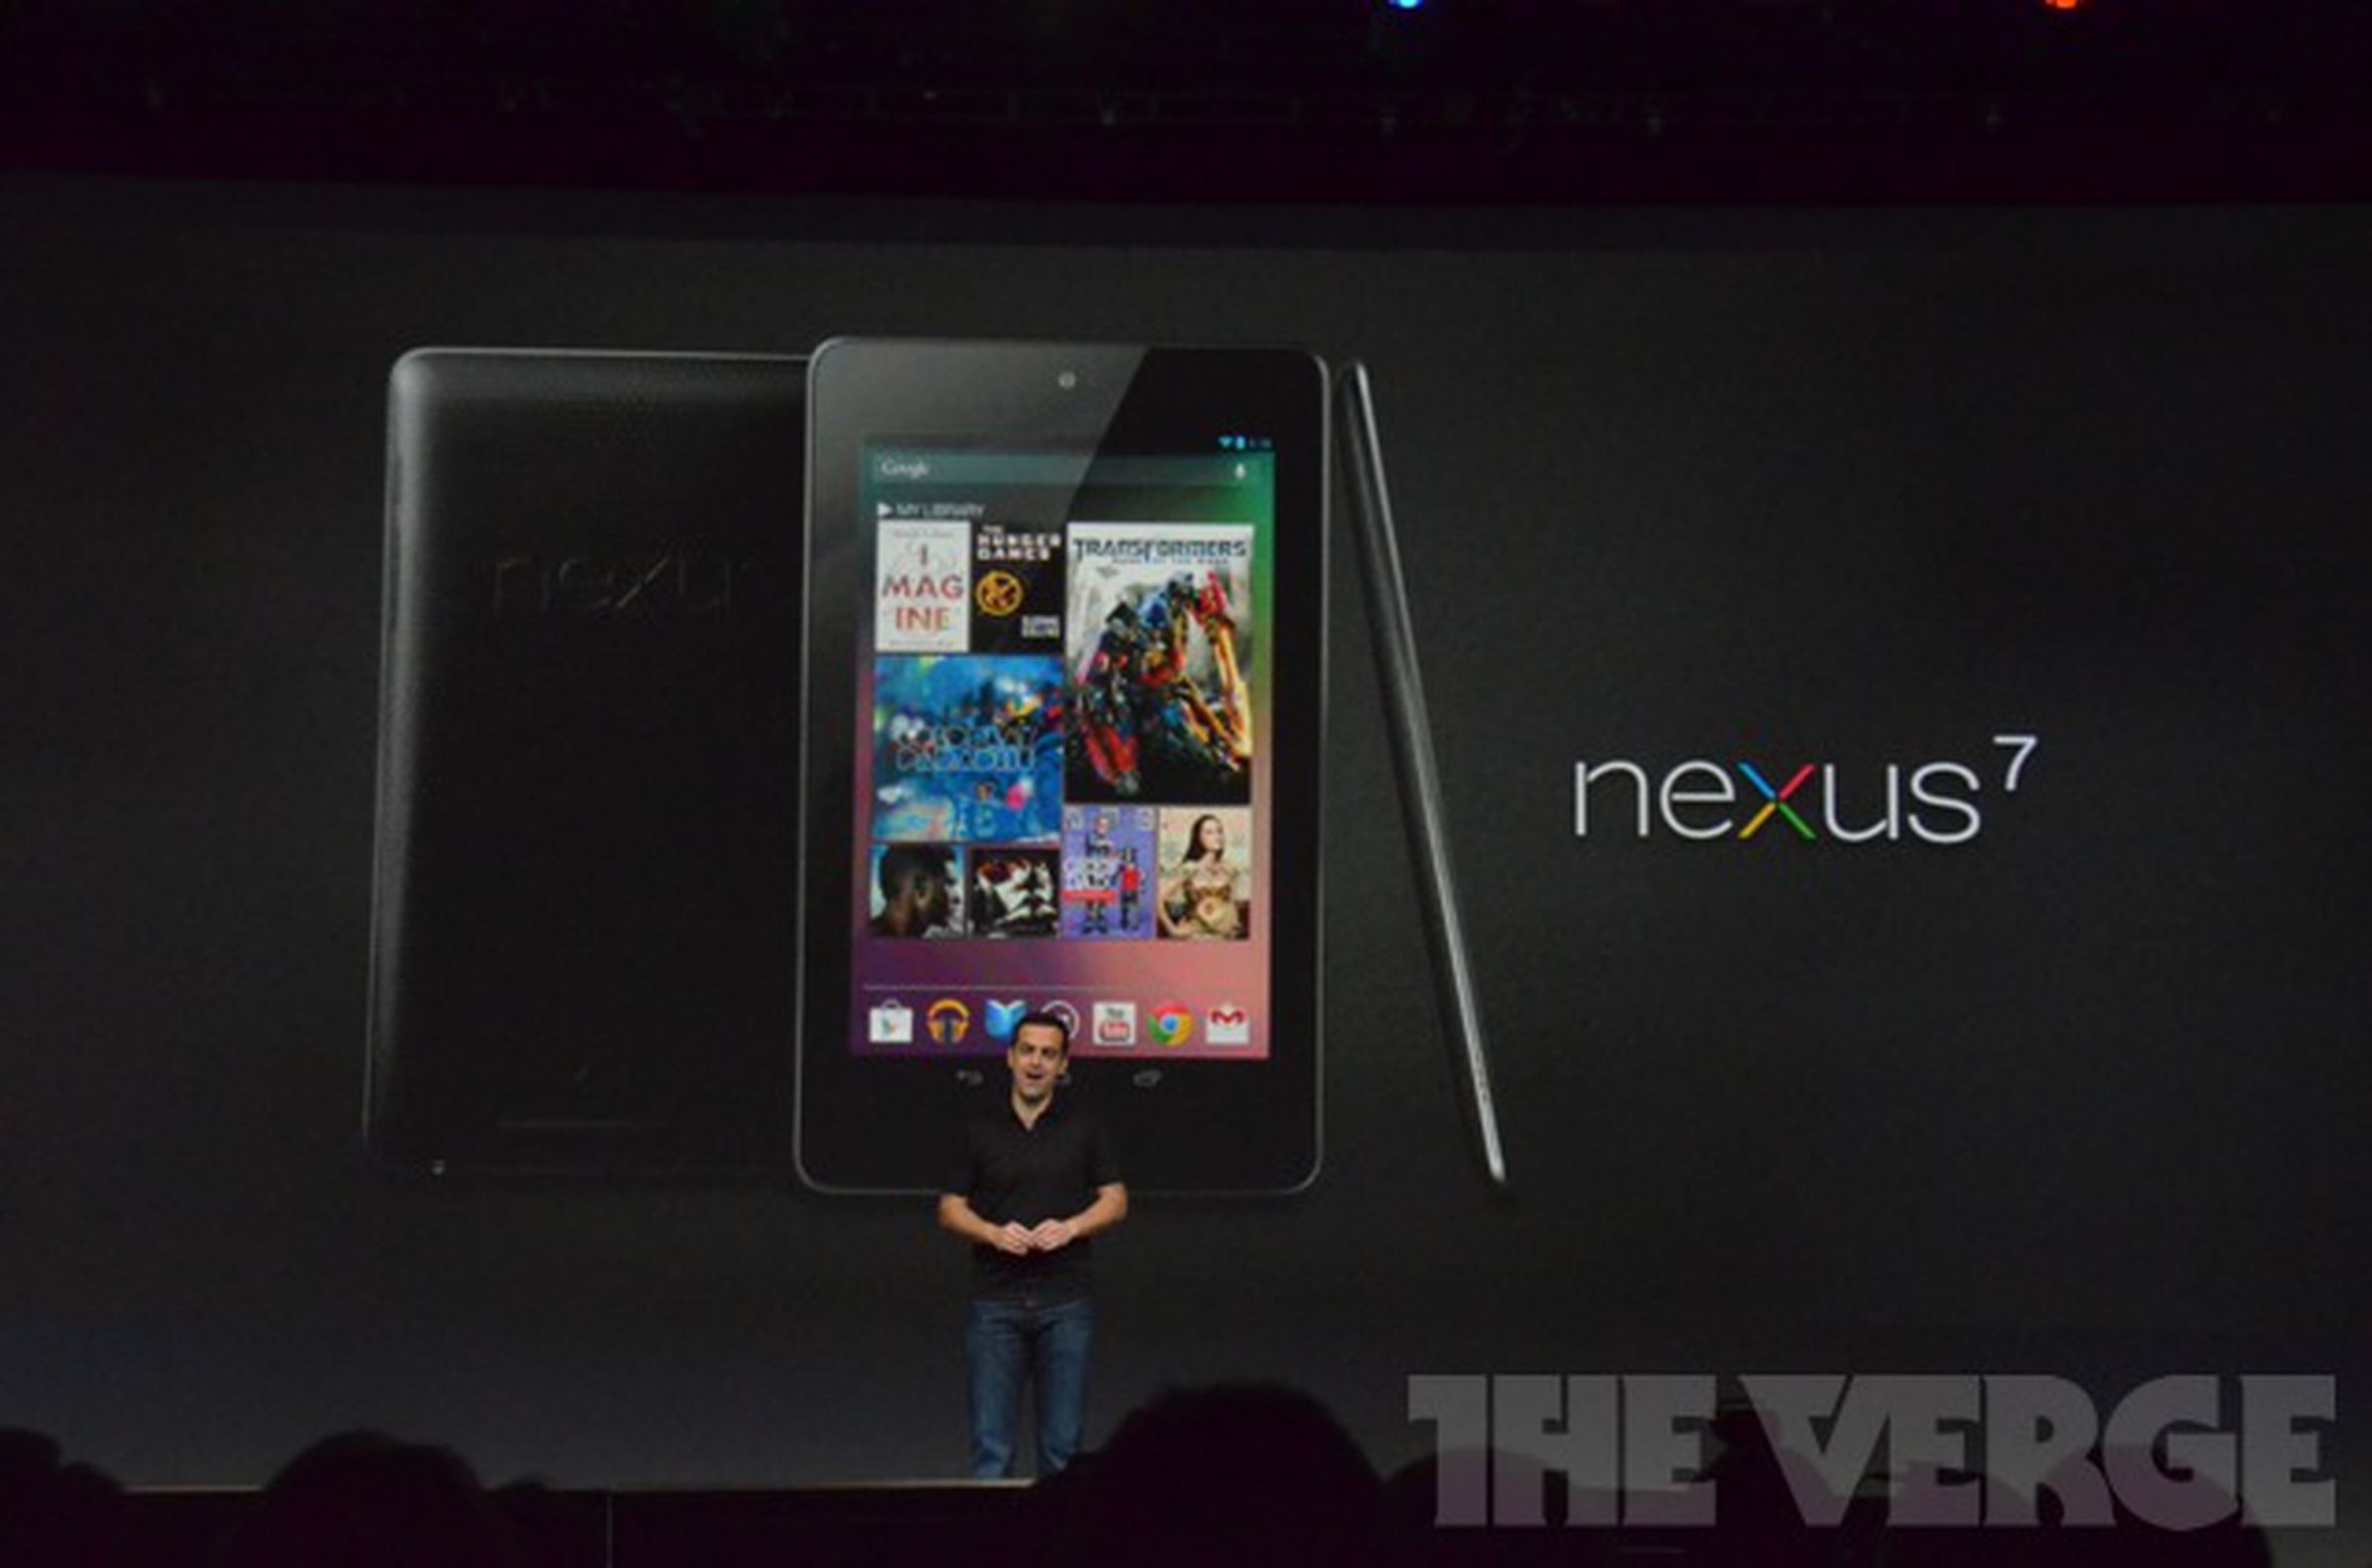 Nexus 7 photos from Google I/O 2012